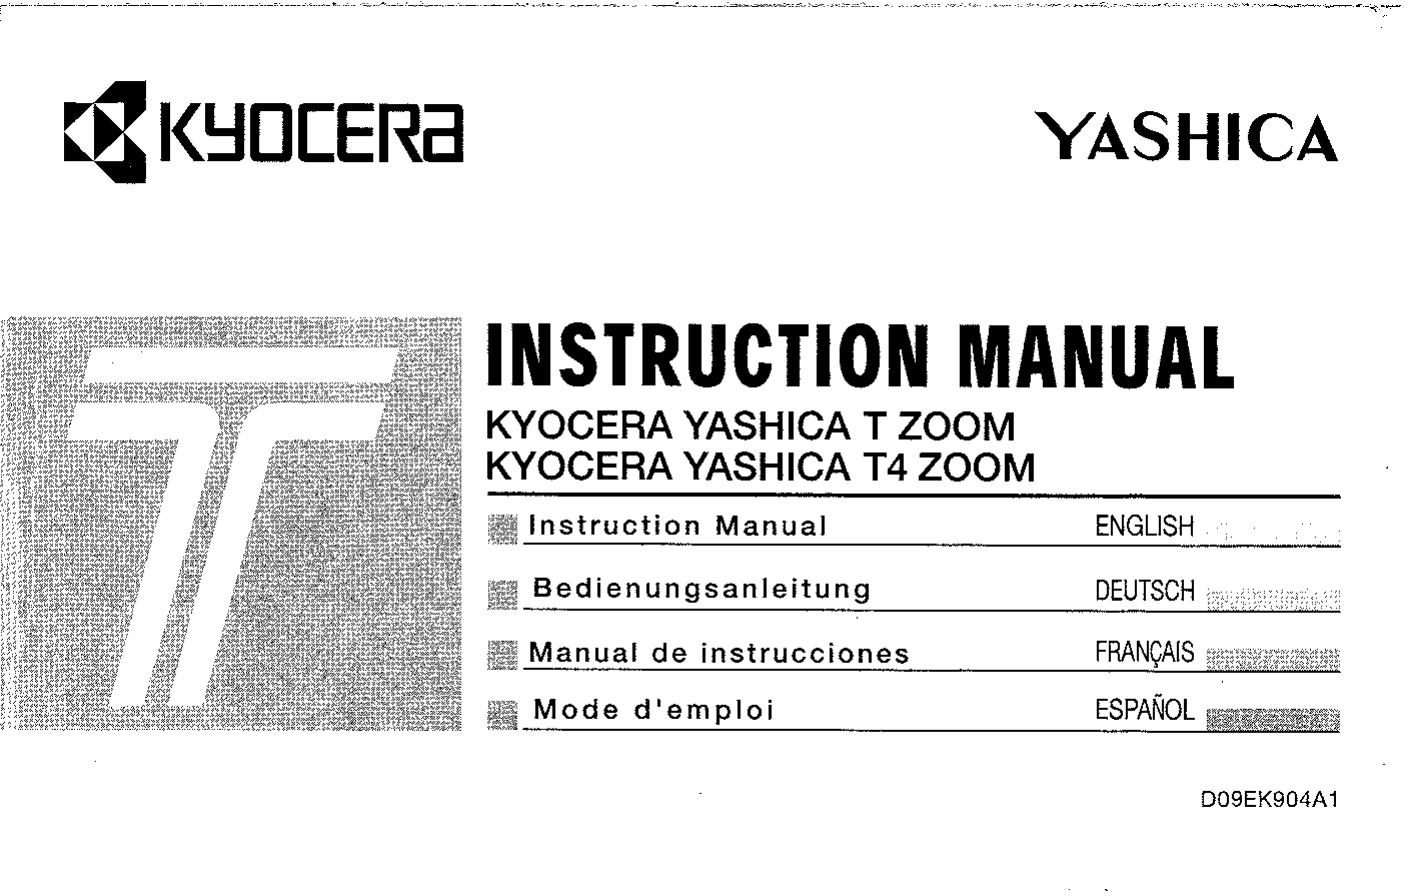 Kyocera e17982 Film Camera User Manual